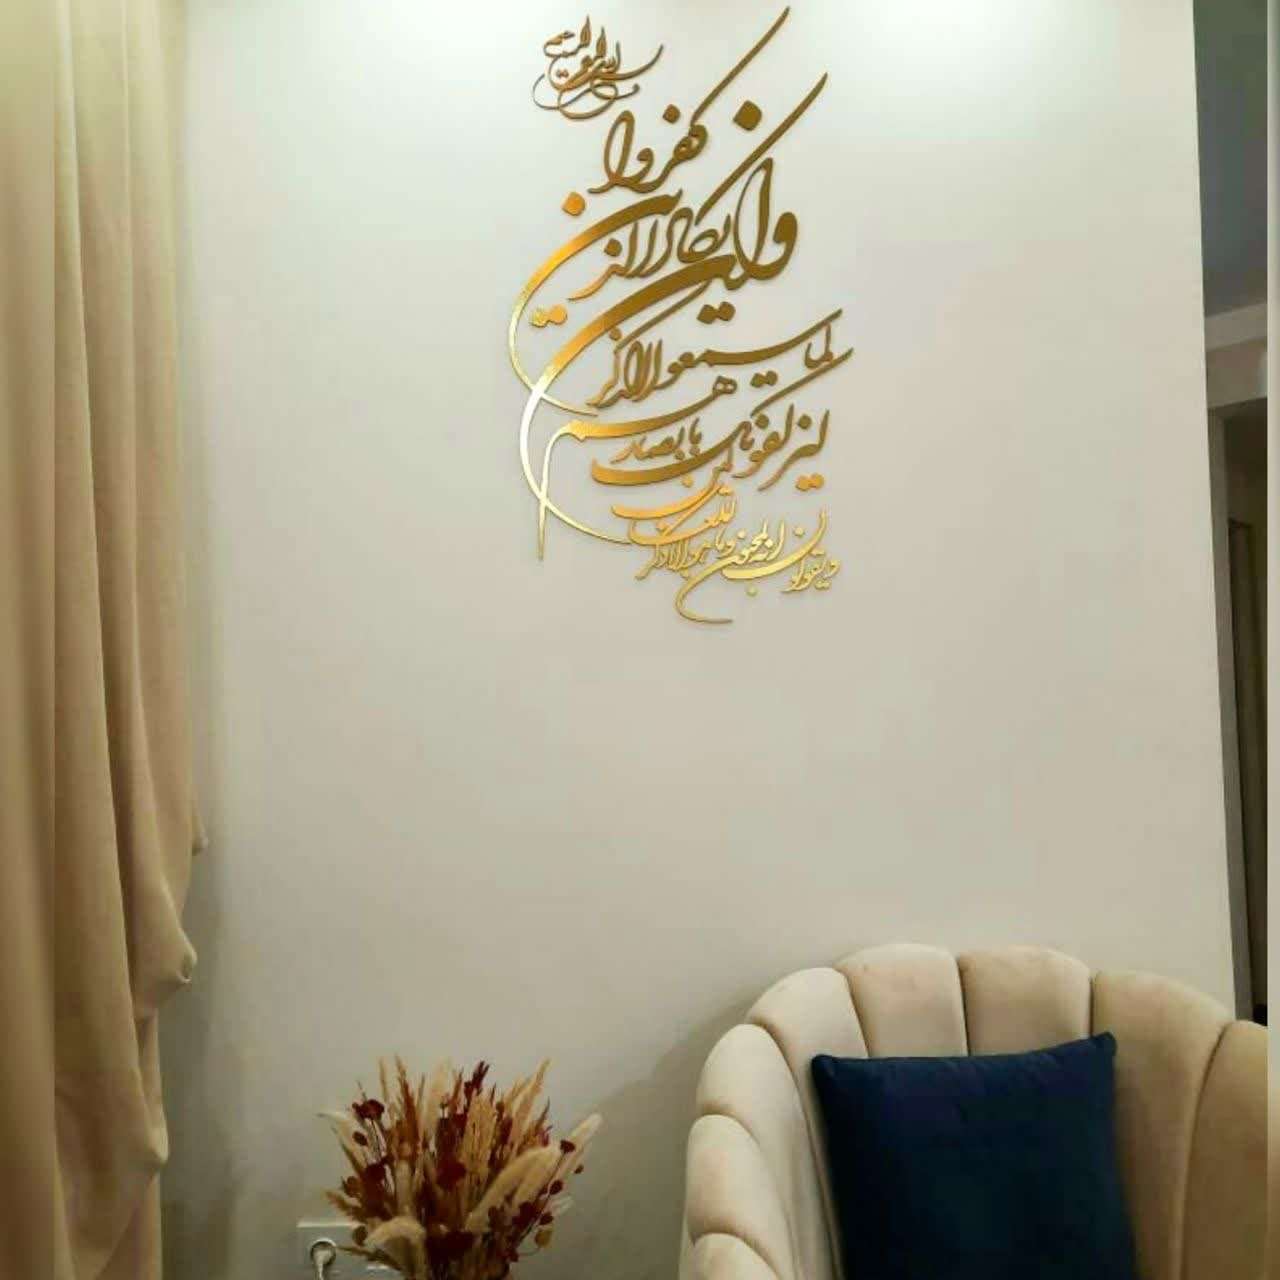 خطاطی متن قرآنی طلایی روی دیوار ، خوشنویس  وان یکاد طلایی کالیگرافی روی دیوار و سقف 